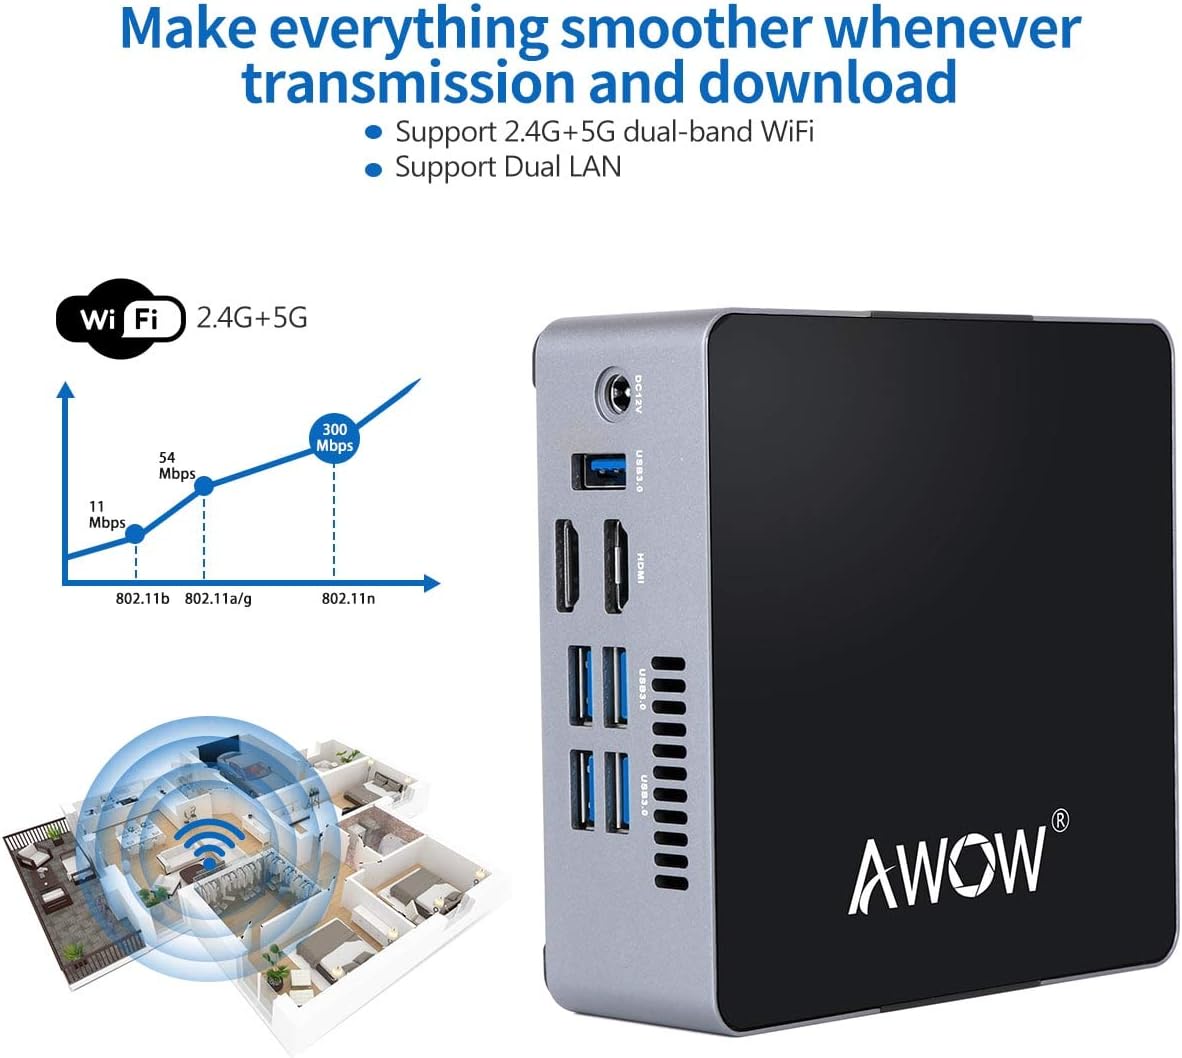 AWOW Mini PC Desktop Computer Intel Celeron N3450 Windows 10 6GB DDR4 128GB SSD/Burst Frequency 2.2 GHz/Dual LAN/ 2.4G+5G Dual Band WiFi/4K /Bluetooth/HDMI/5 USB3.0 Ports Micro PC